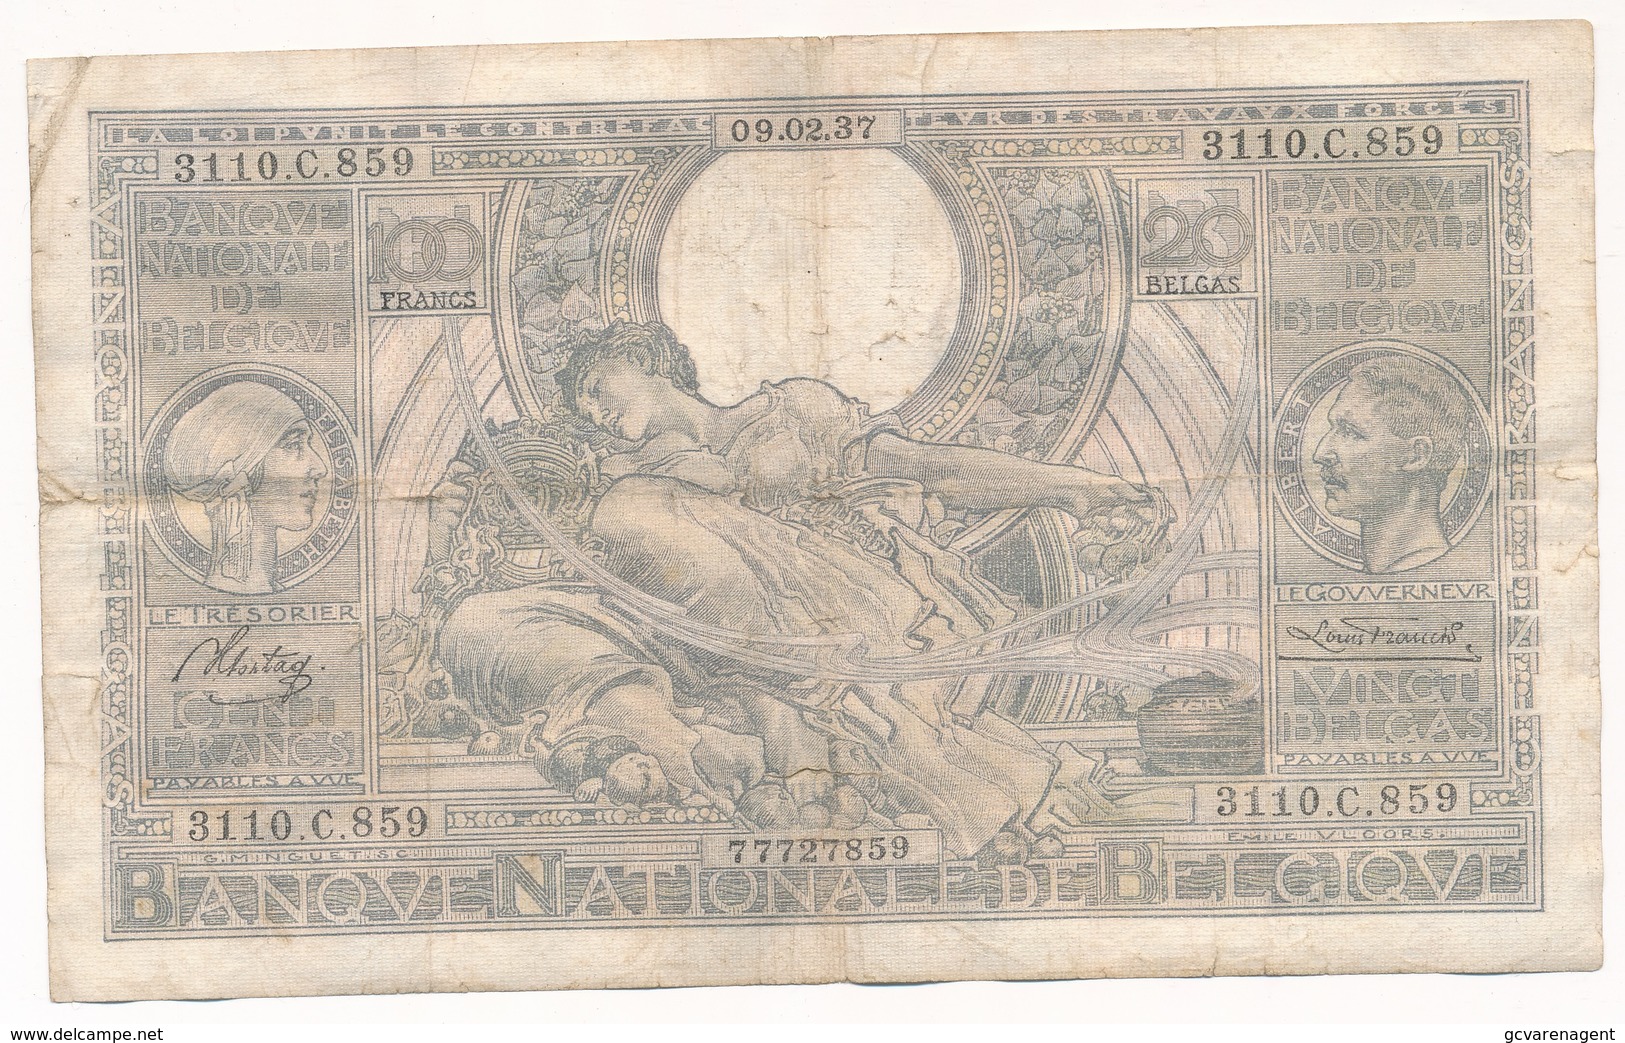 BELGIQUE 100 FRANCS-20 BELGAS 1937  - 2 SCANS - 100 Francs & 100 Francs-20 Belgas